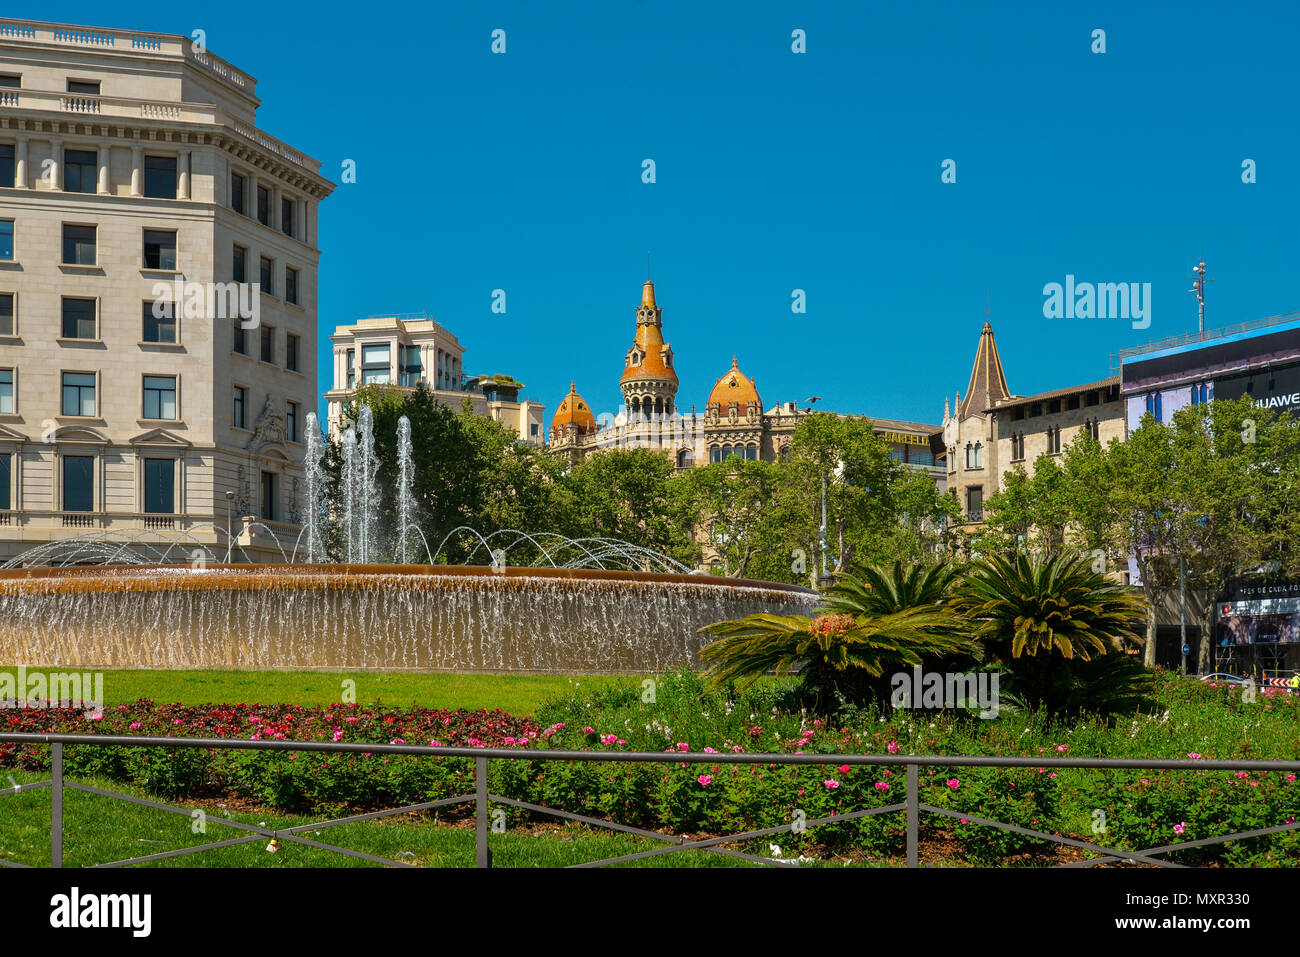 BARCELONA, Spanien - 9. APRIL 2017: Schönen Brunnen am Plaza Catalunya oder Plaça Catalunya in Barcelona im sonnigen Sommertag, Katalonien, Spanien Stockfoto